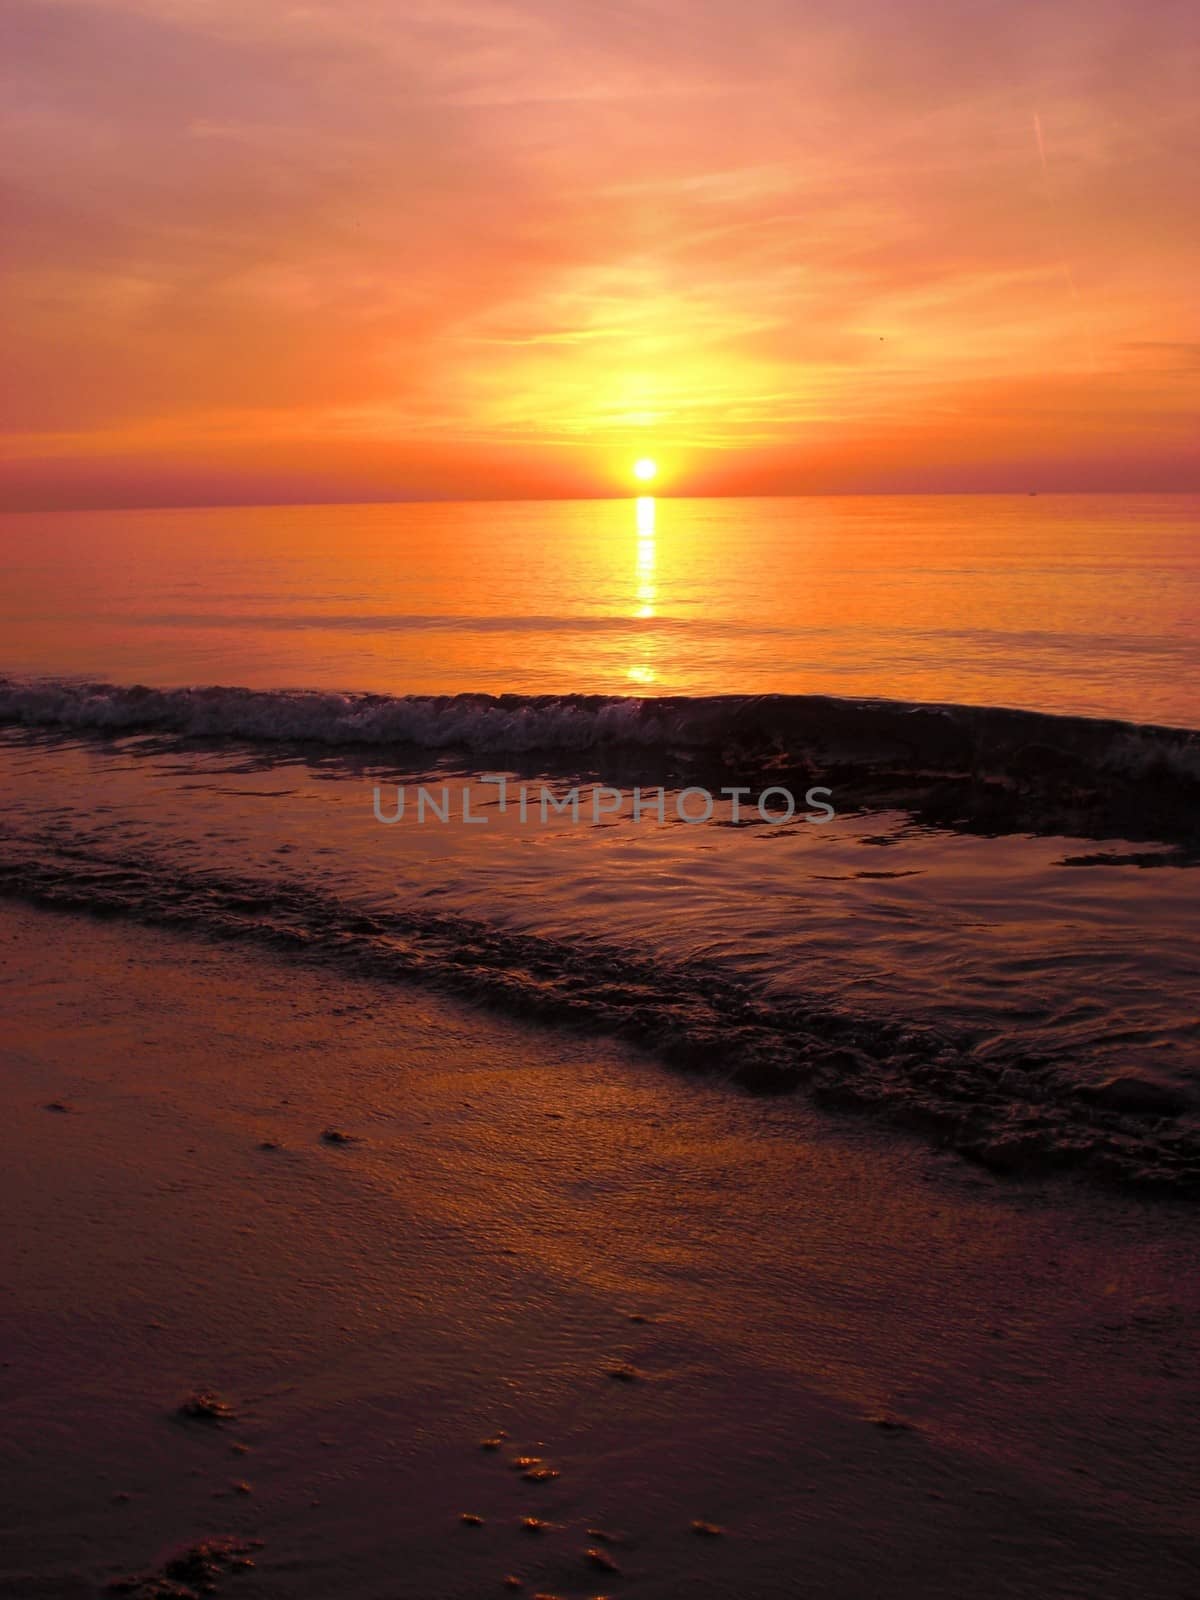 Sunset at Beach by fstockluk